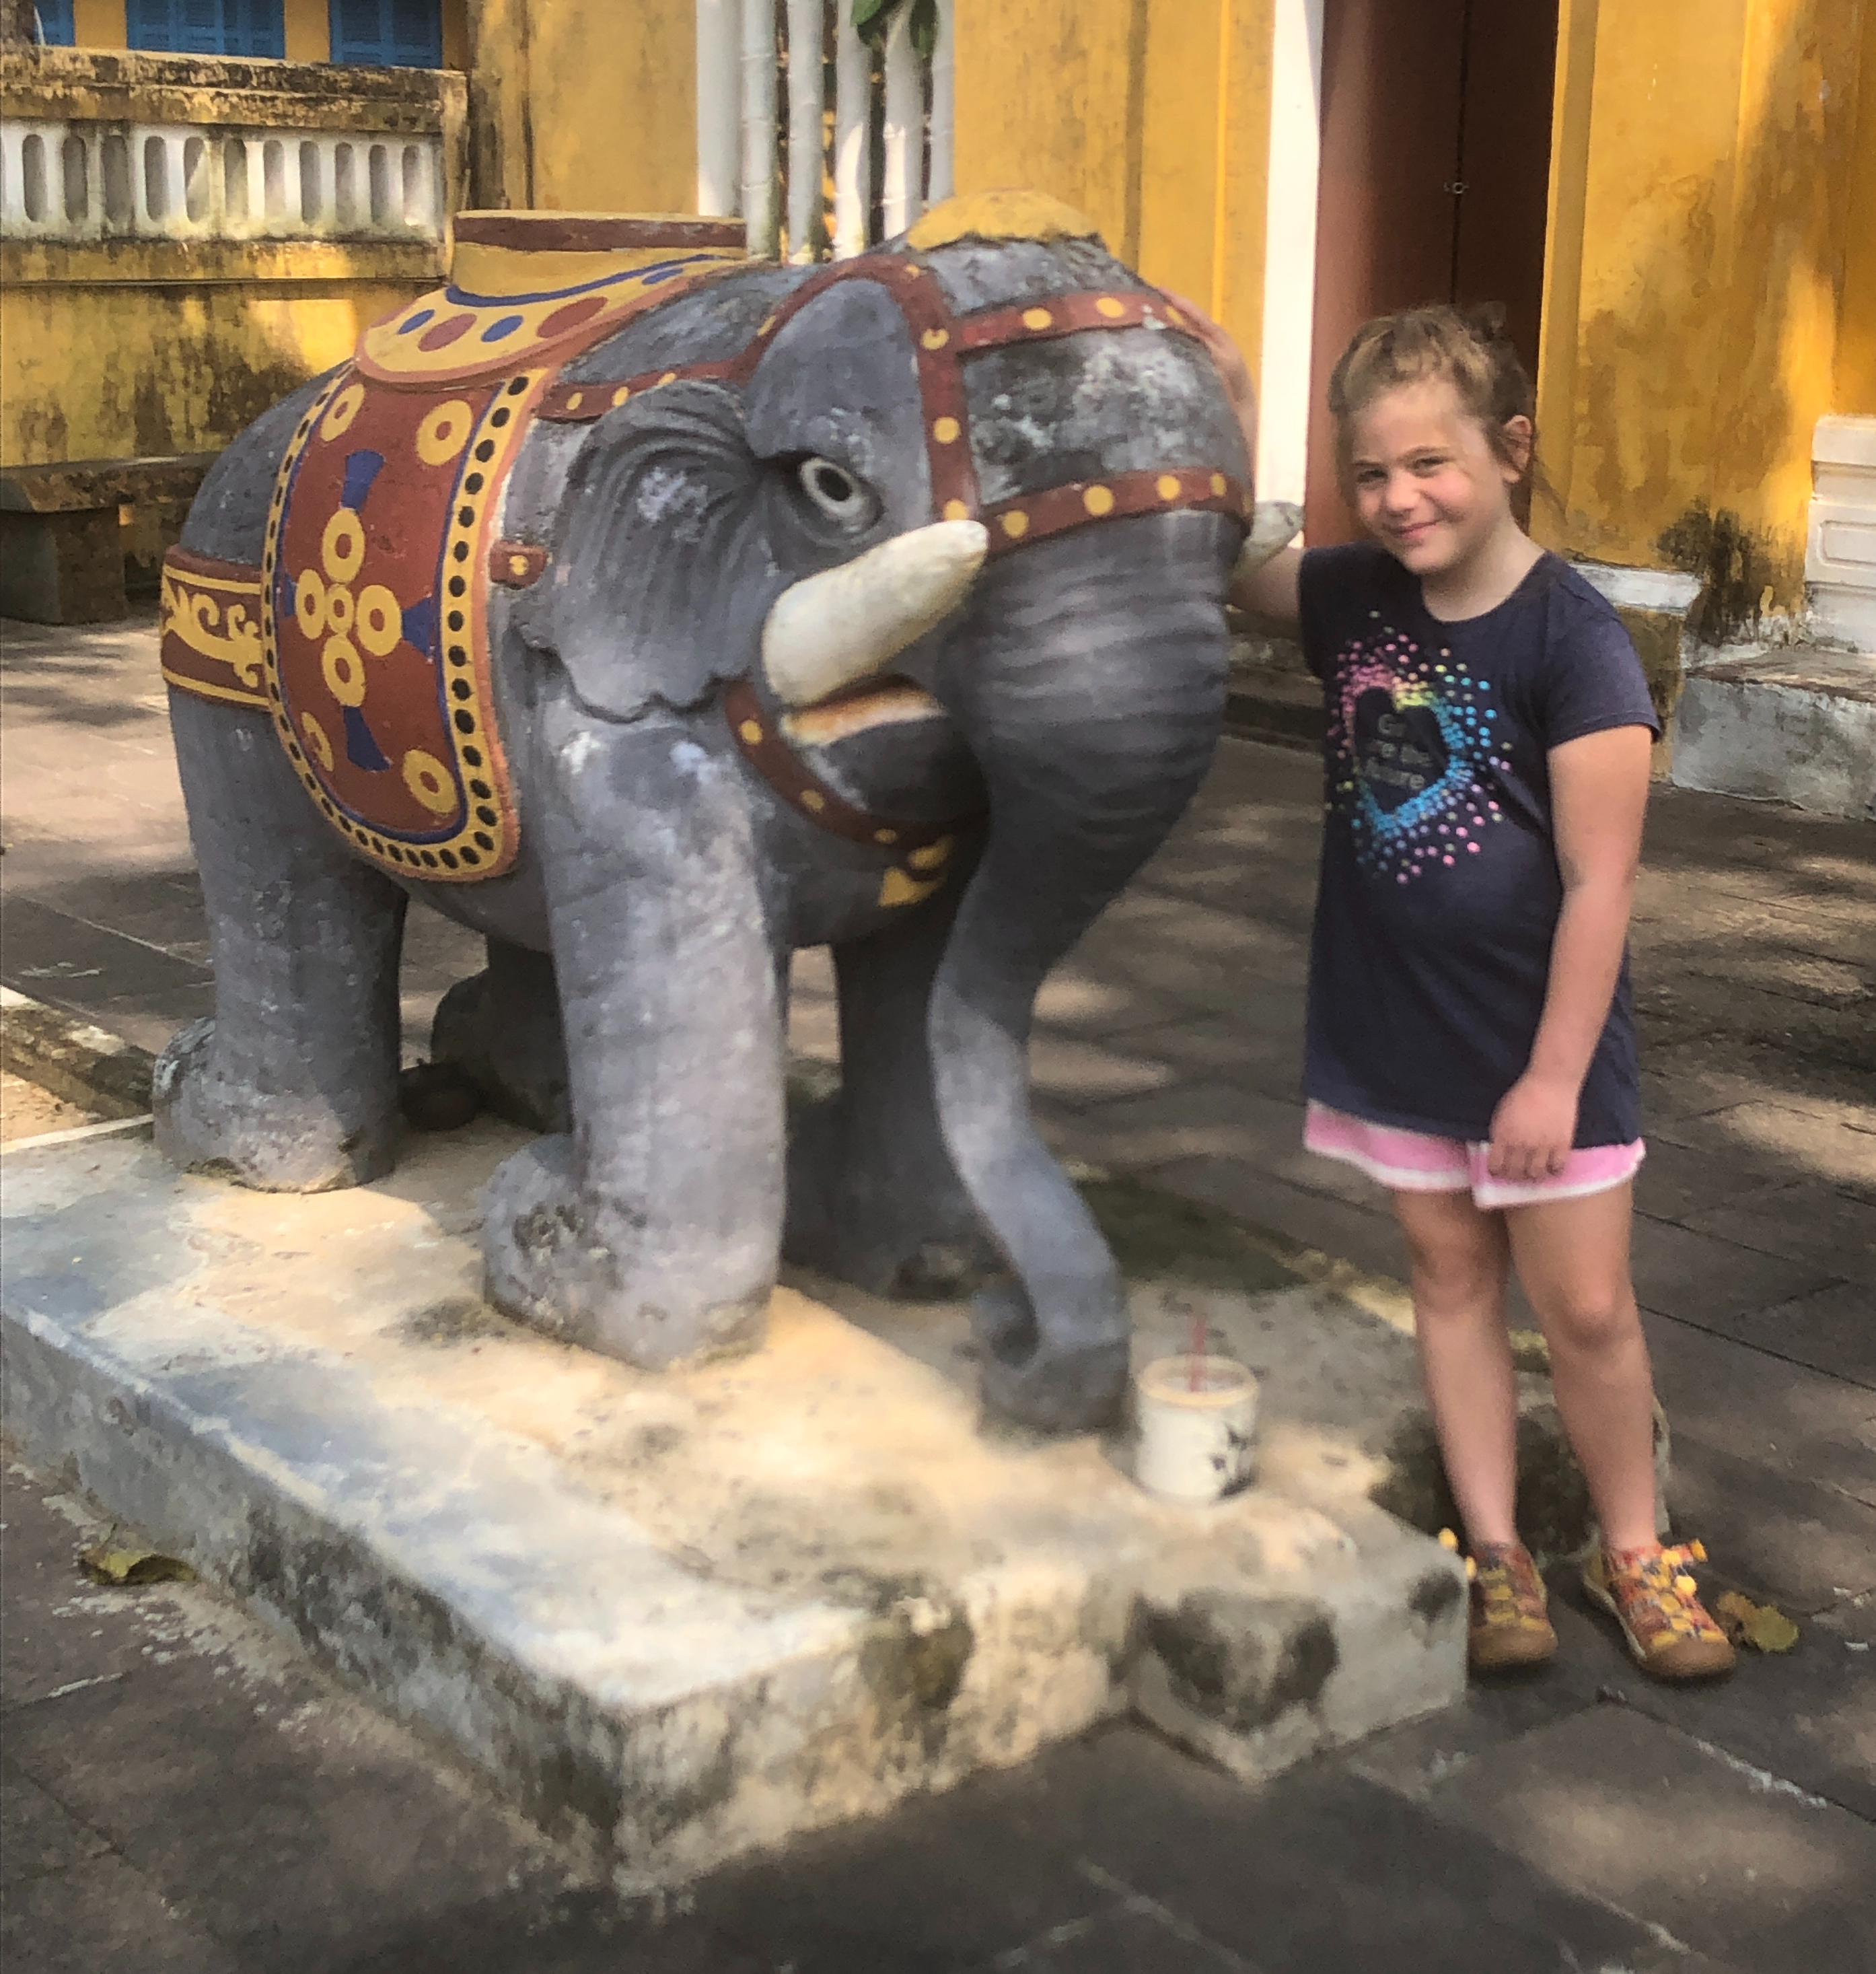 E standing next to an elephant statue.